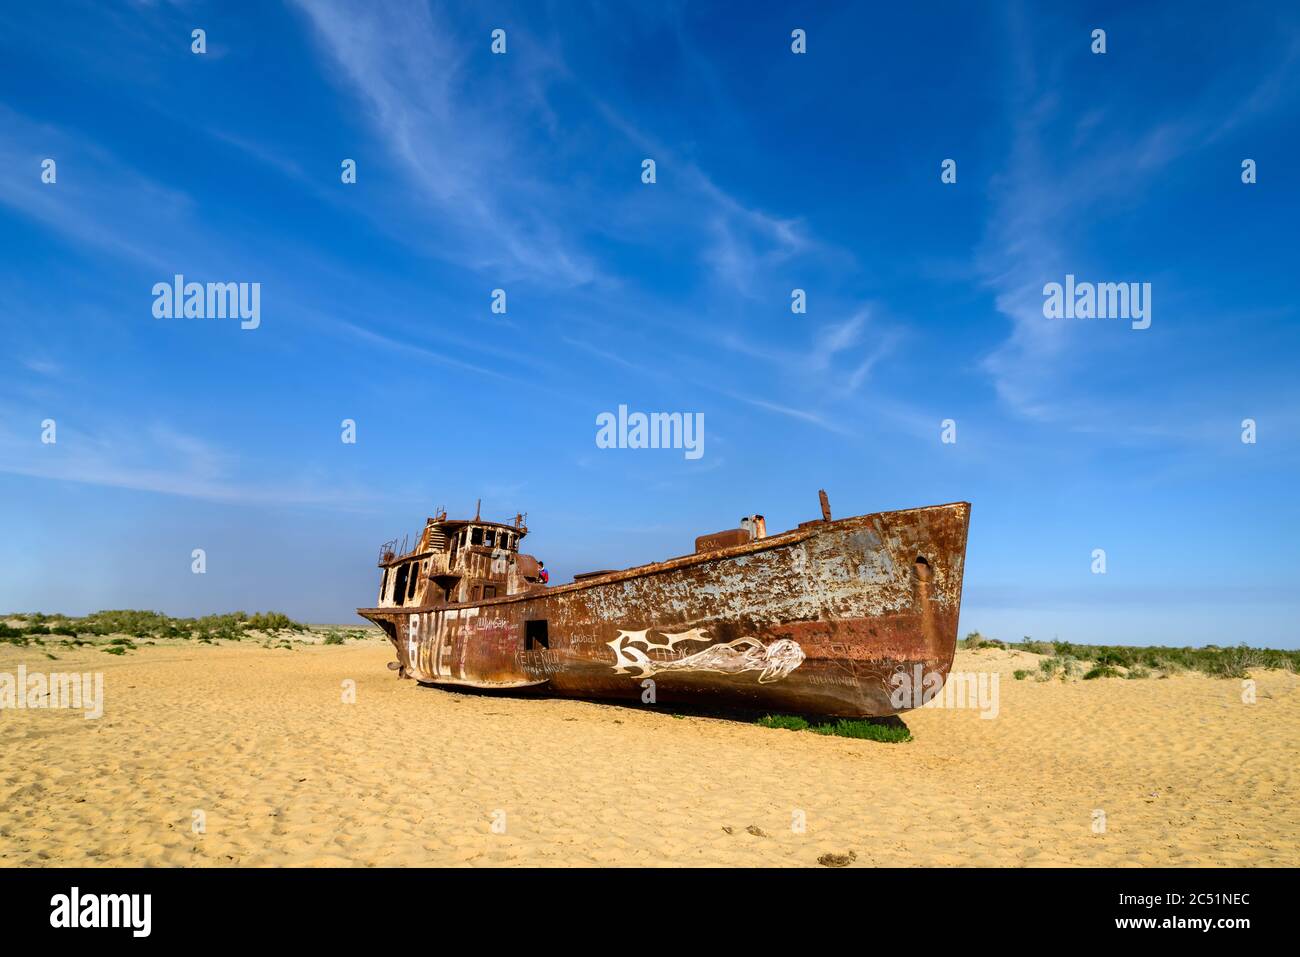 Moynaq, Uzbekistan - 08 May 2019: Rusting ships on the dry Aral sea in Uzbekistan in Moynaq Stock Photo